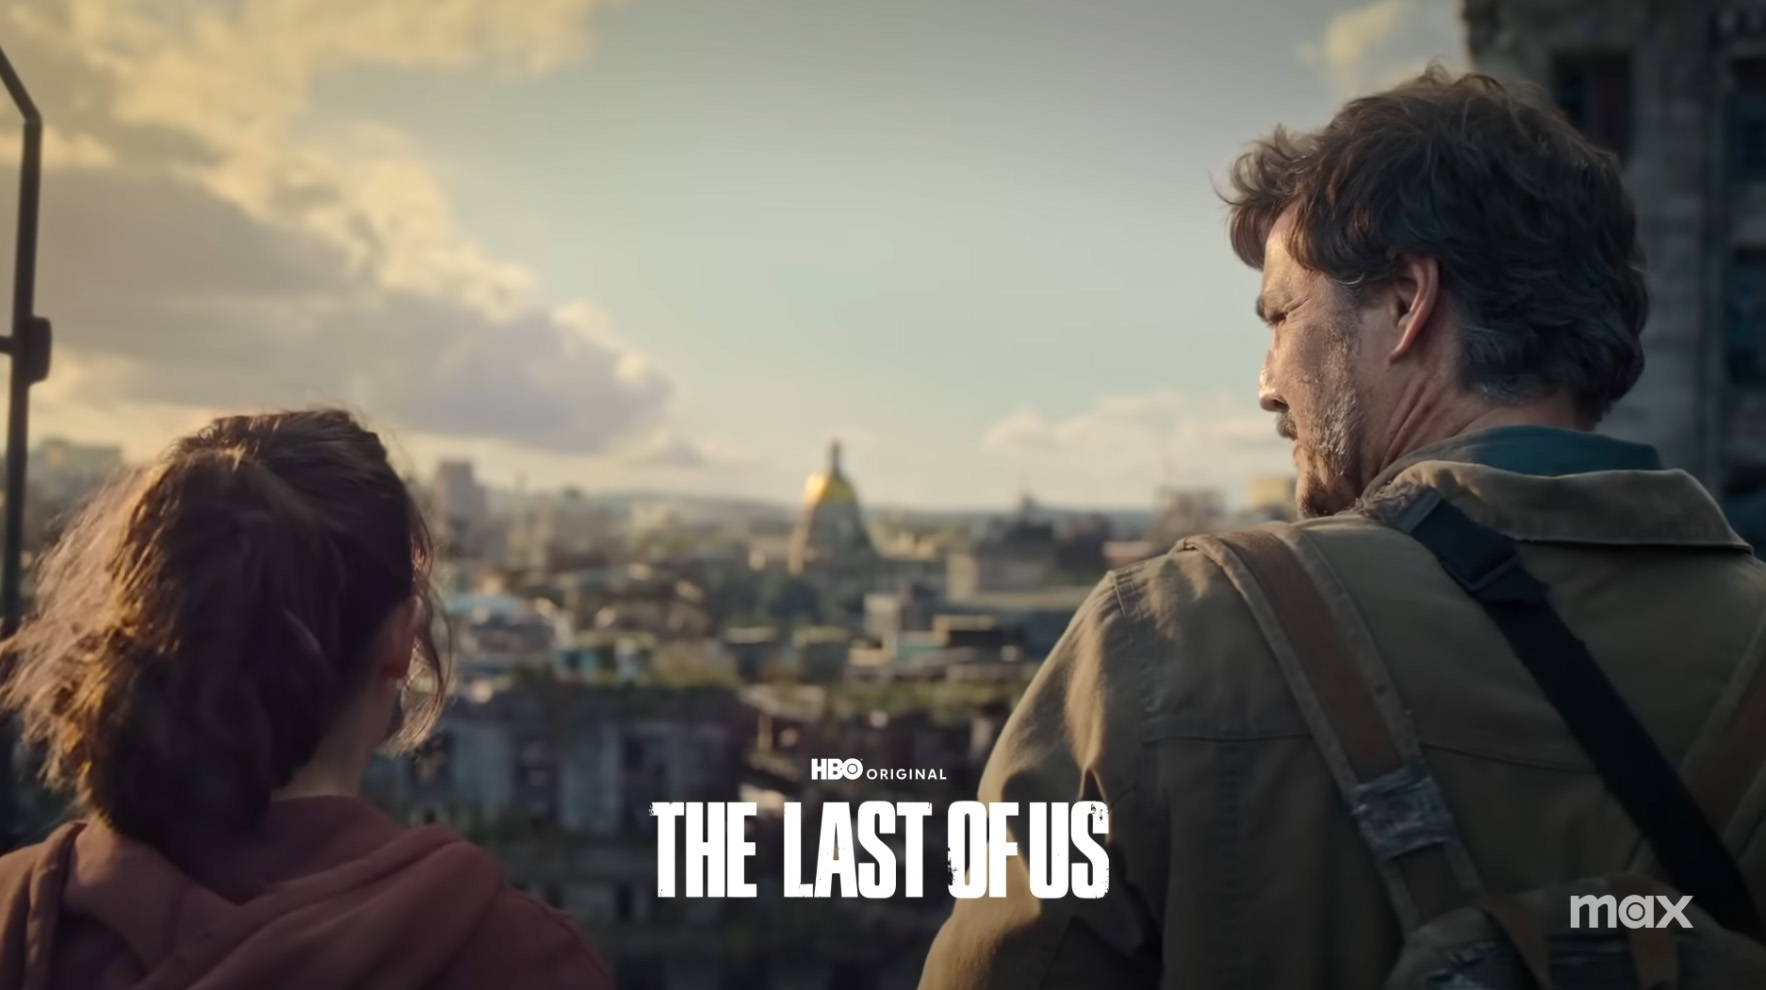 The Last of Us trailer screenshot